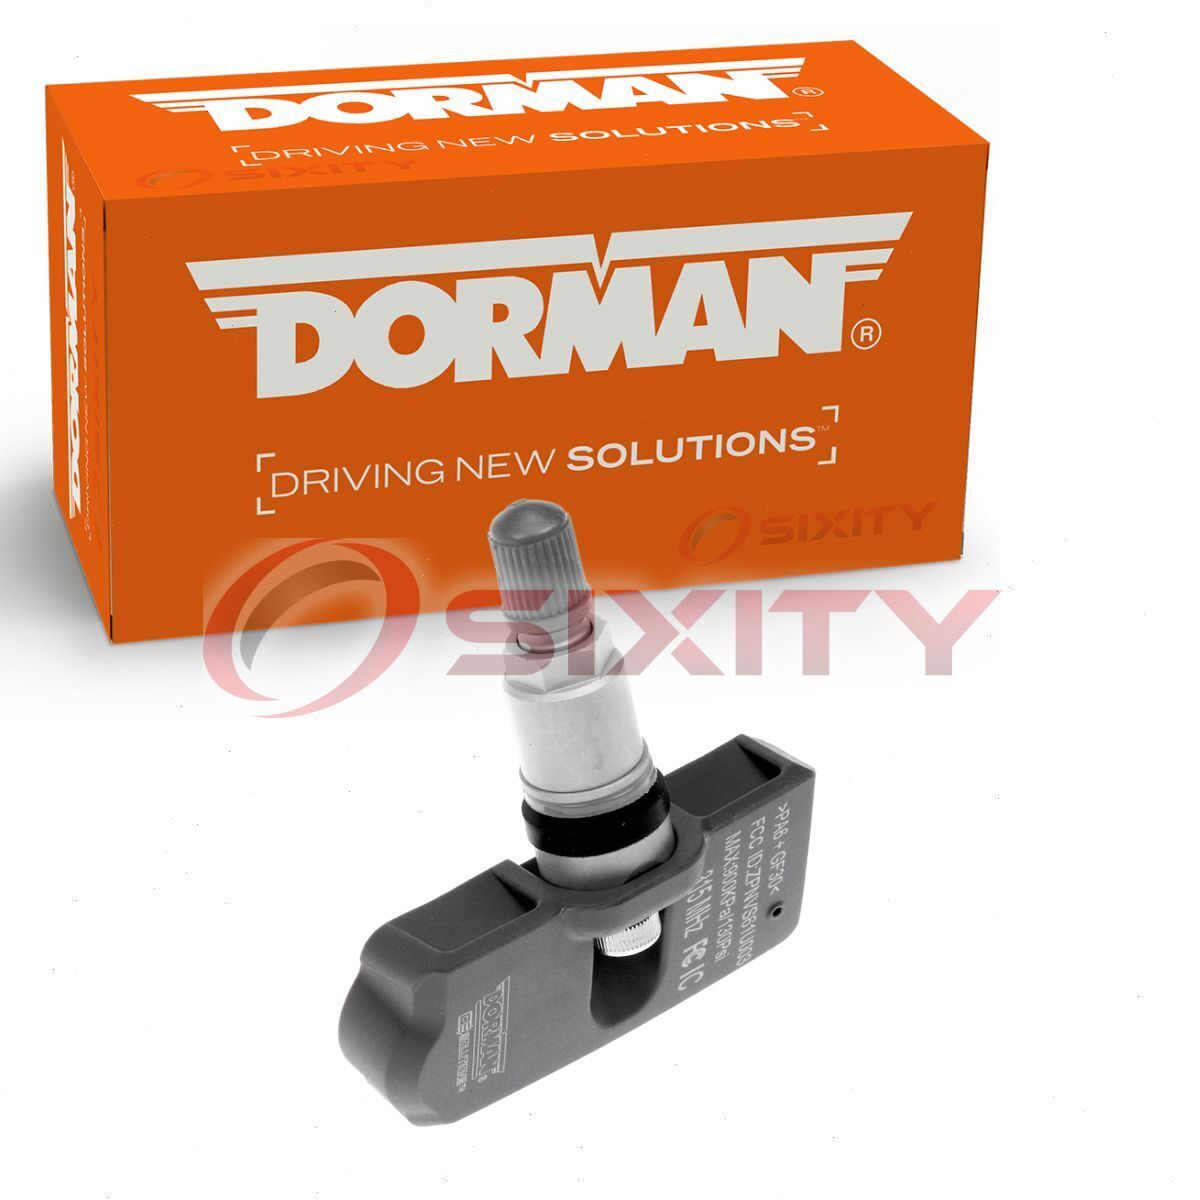 Dorman TPMS Programmable Sensor for 1999 BMW 328is Tire Pressure Monitoring qt